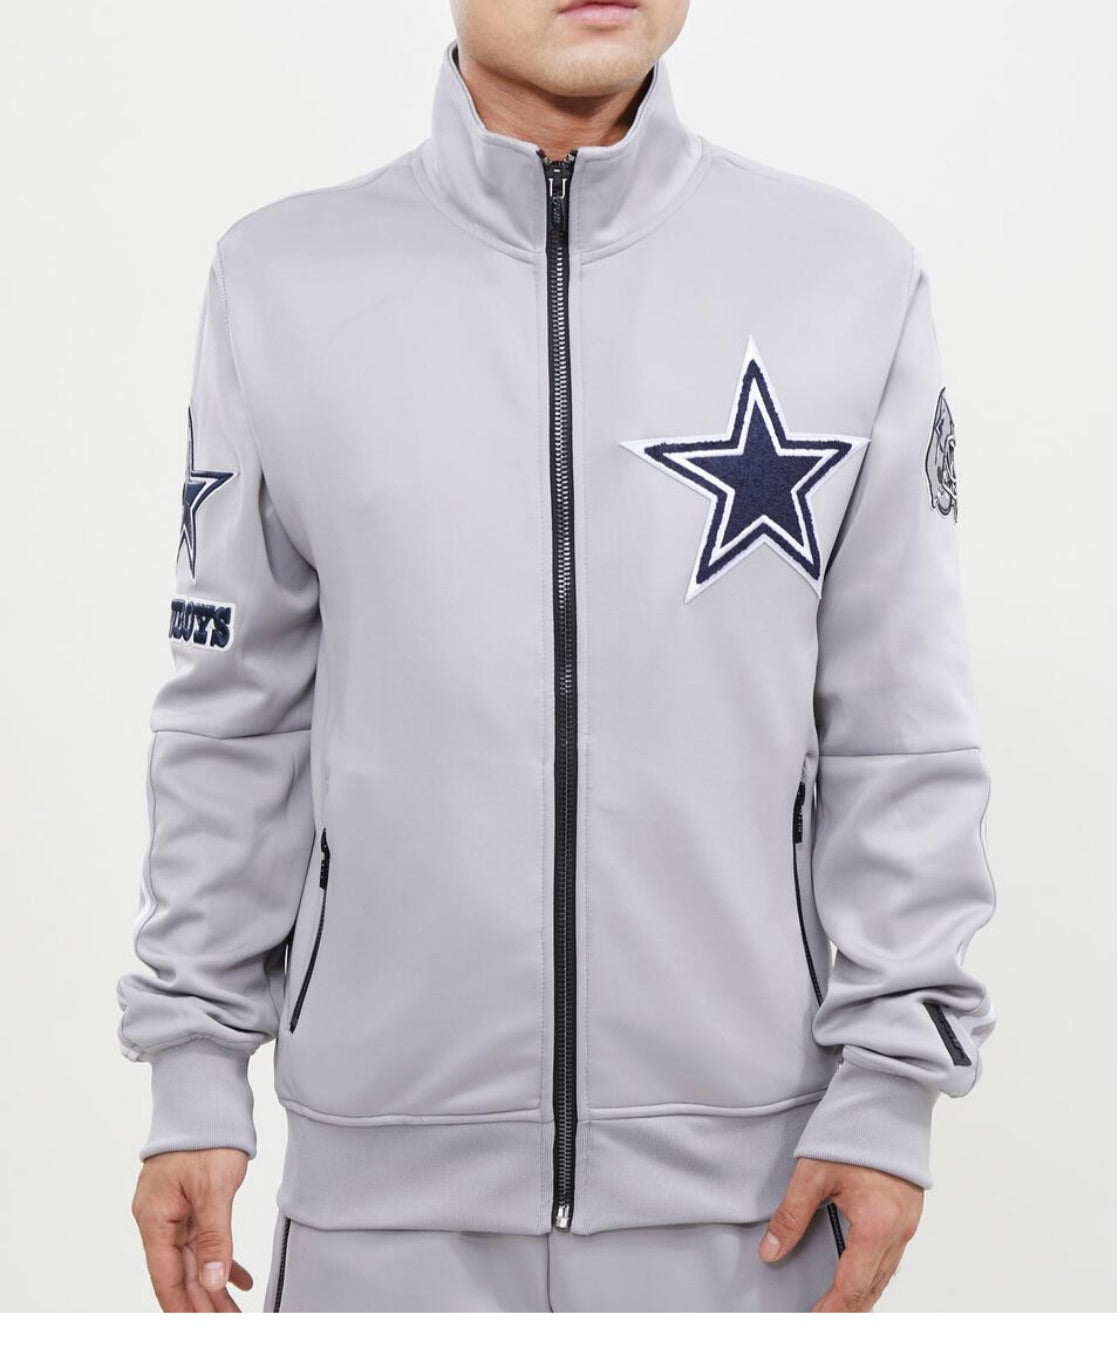 Men’s Pro Standard Dallas Cowboys Jacket